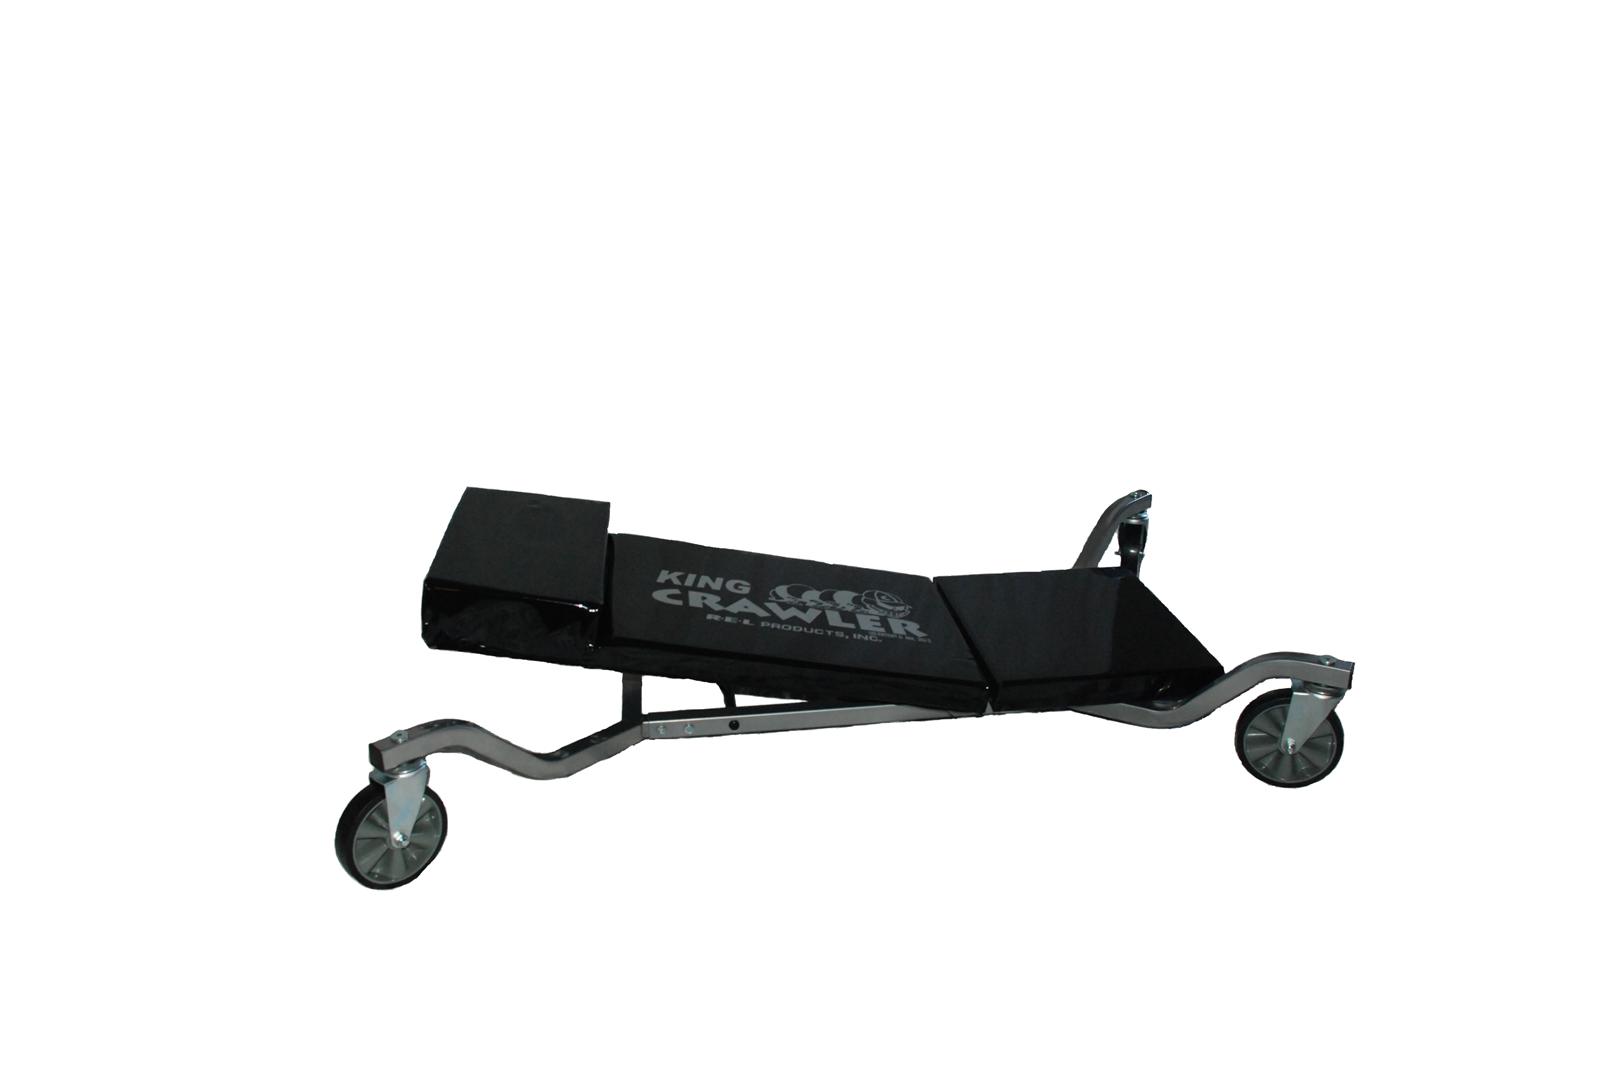 Traxion 1-210 King Crawler Mechanics Creeper with Adjustable Headrest 